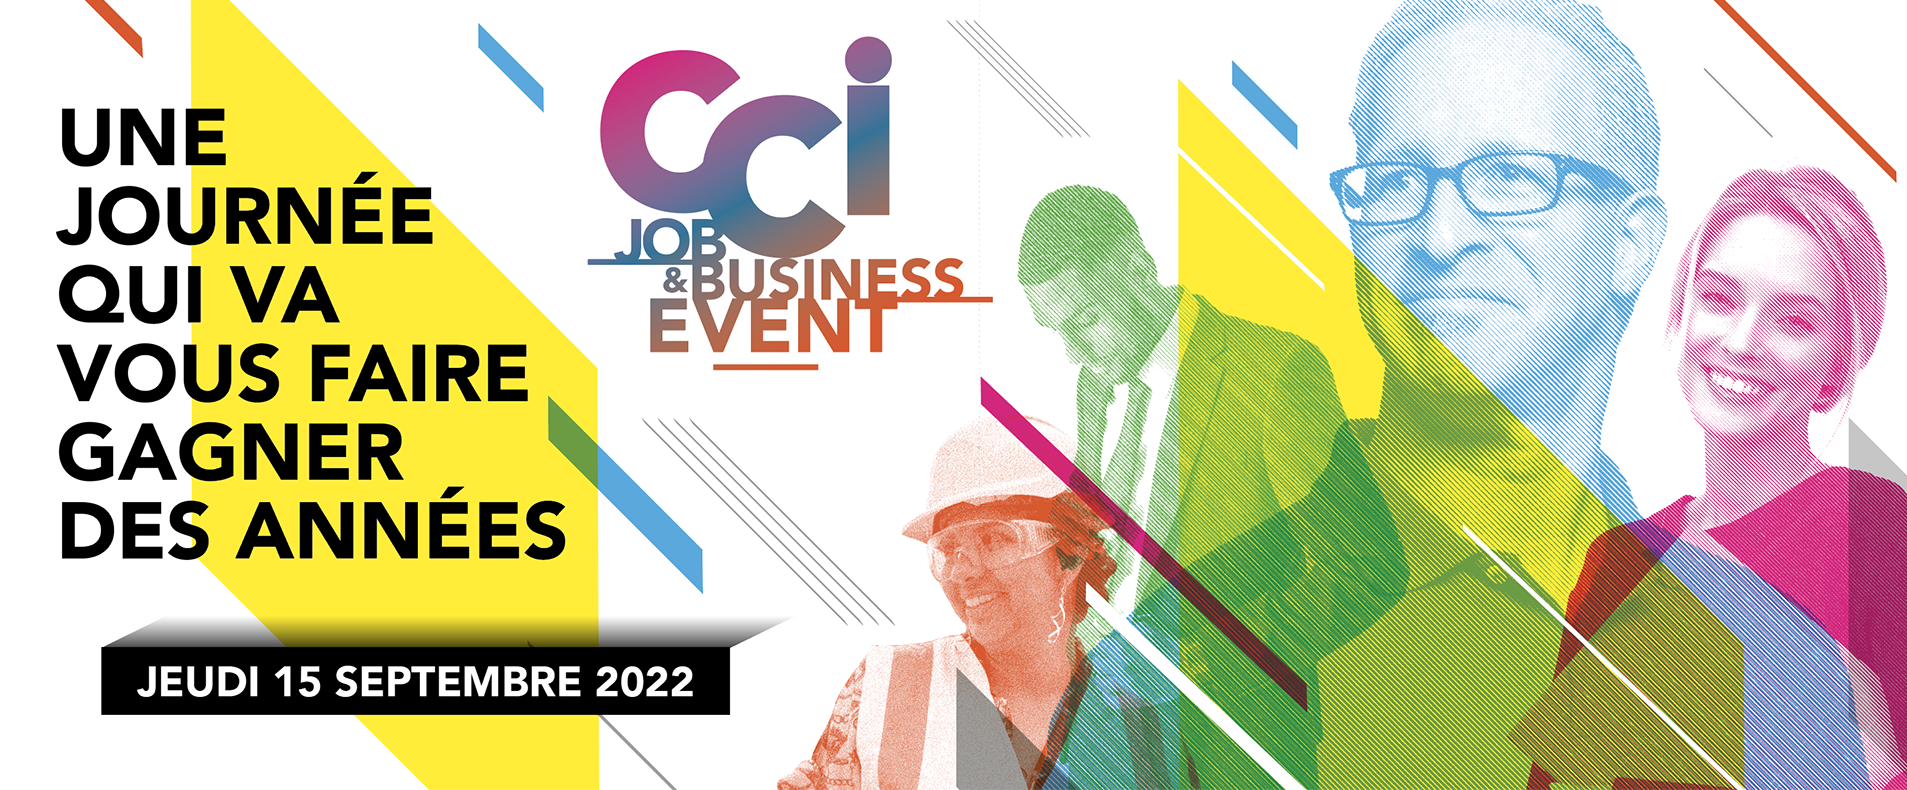 CCI Job & business Event